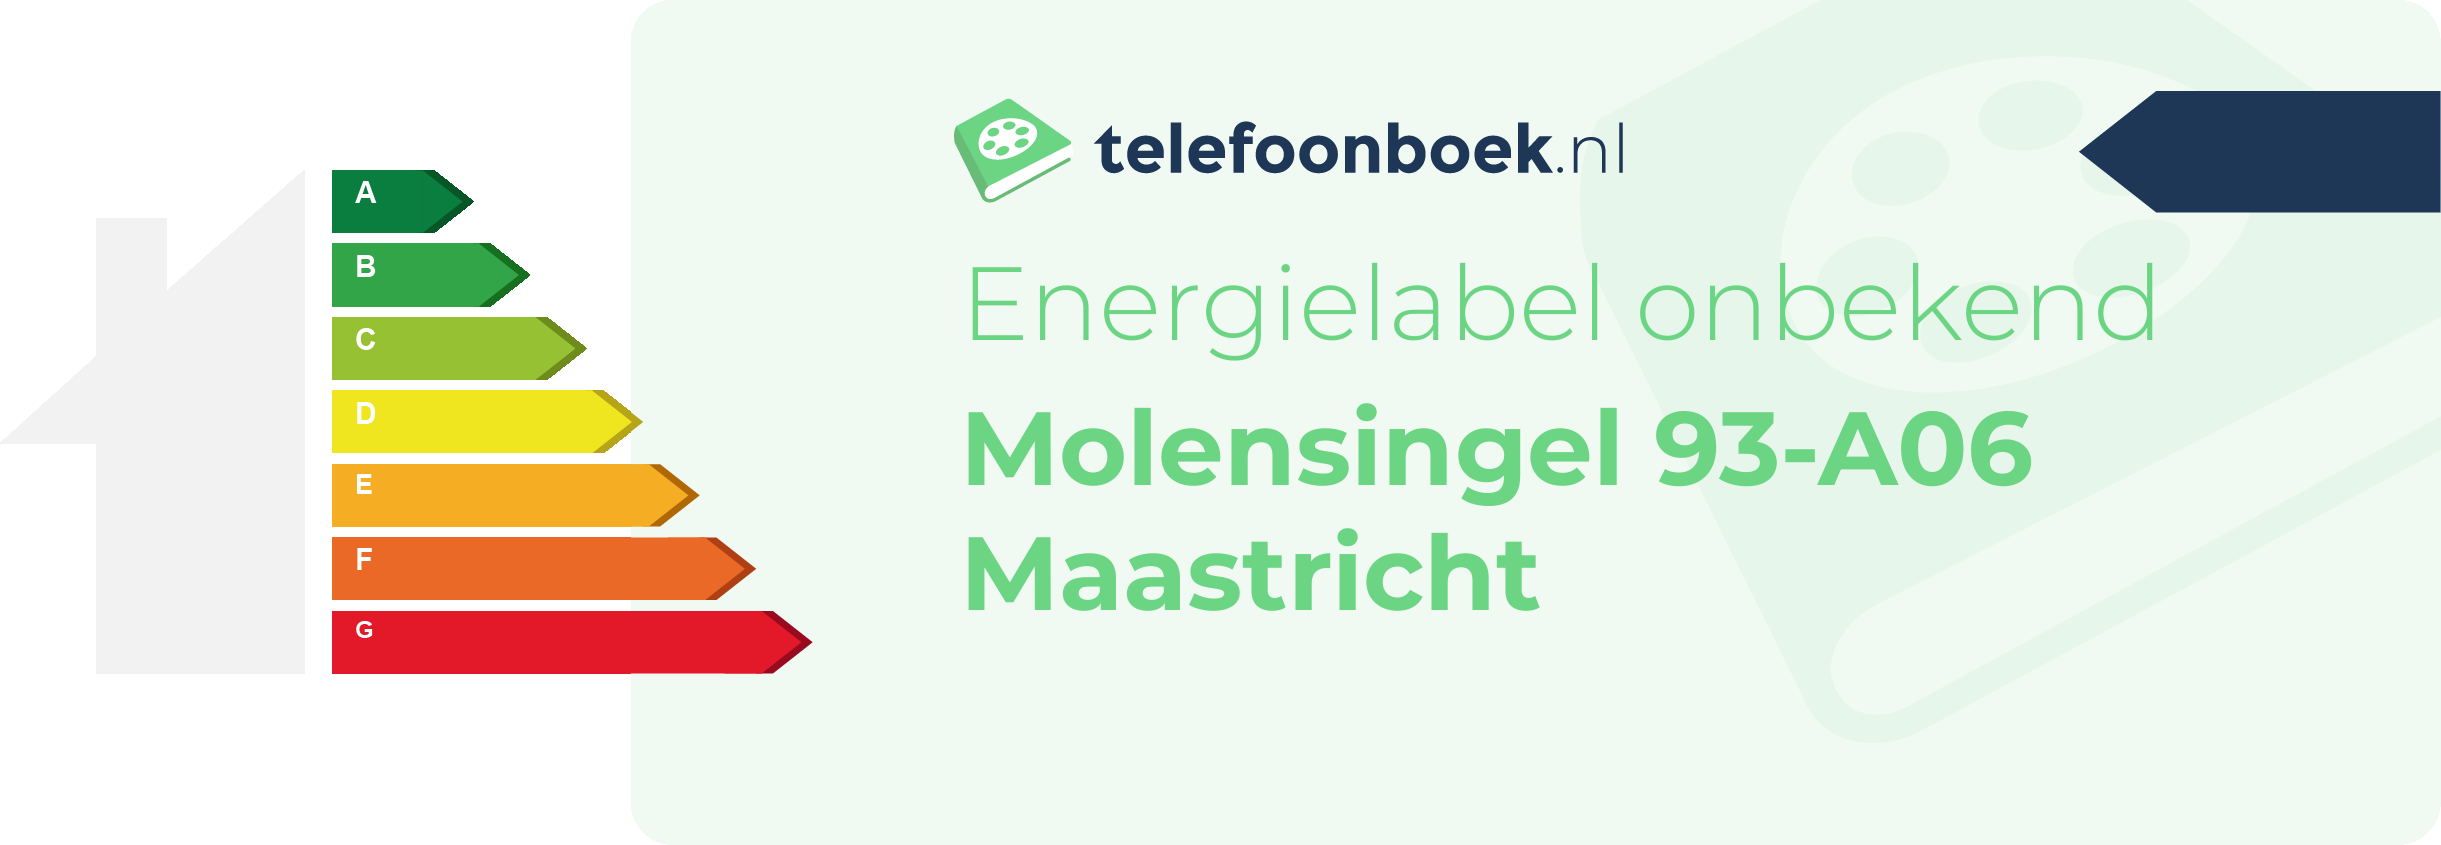 Energielabel Molensingel 93-A06 Maastricht